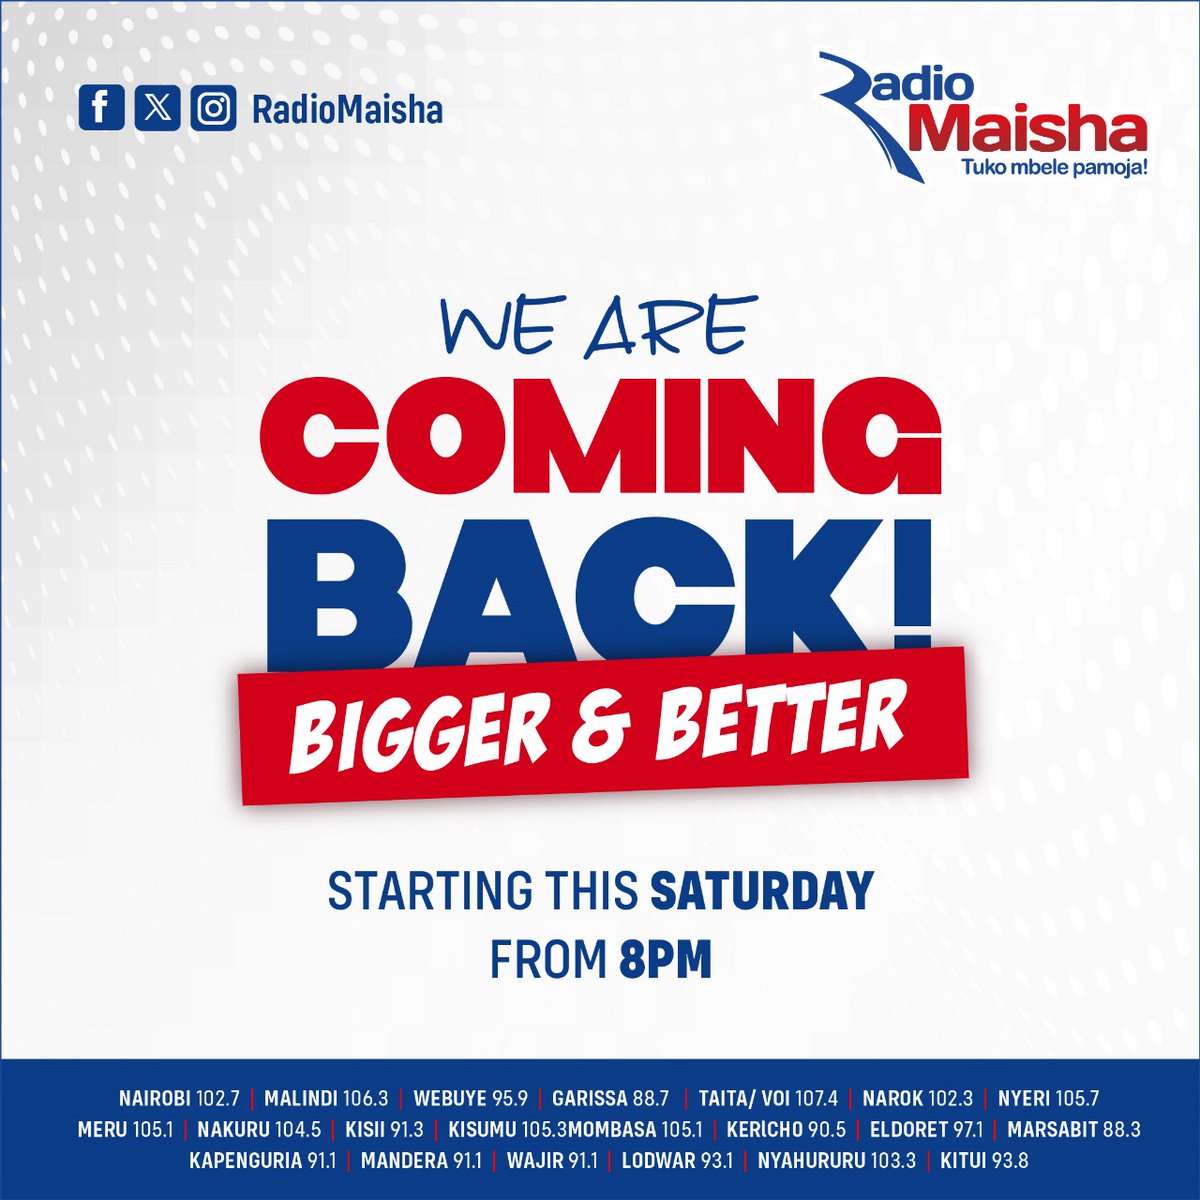 This Saturday we are coming back BIGGER & BETTER!! #KlubMaisha #MaishaNiBoraZaidi #RadioZaidiYaRadio #MaishaConcertFriday